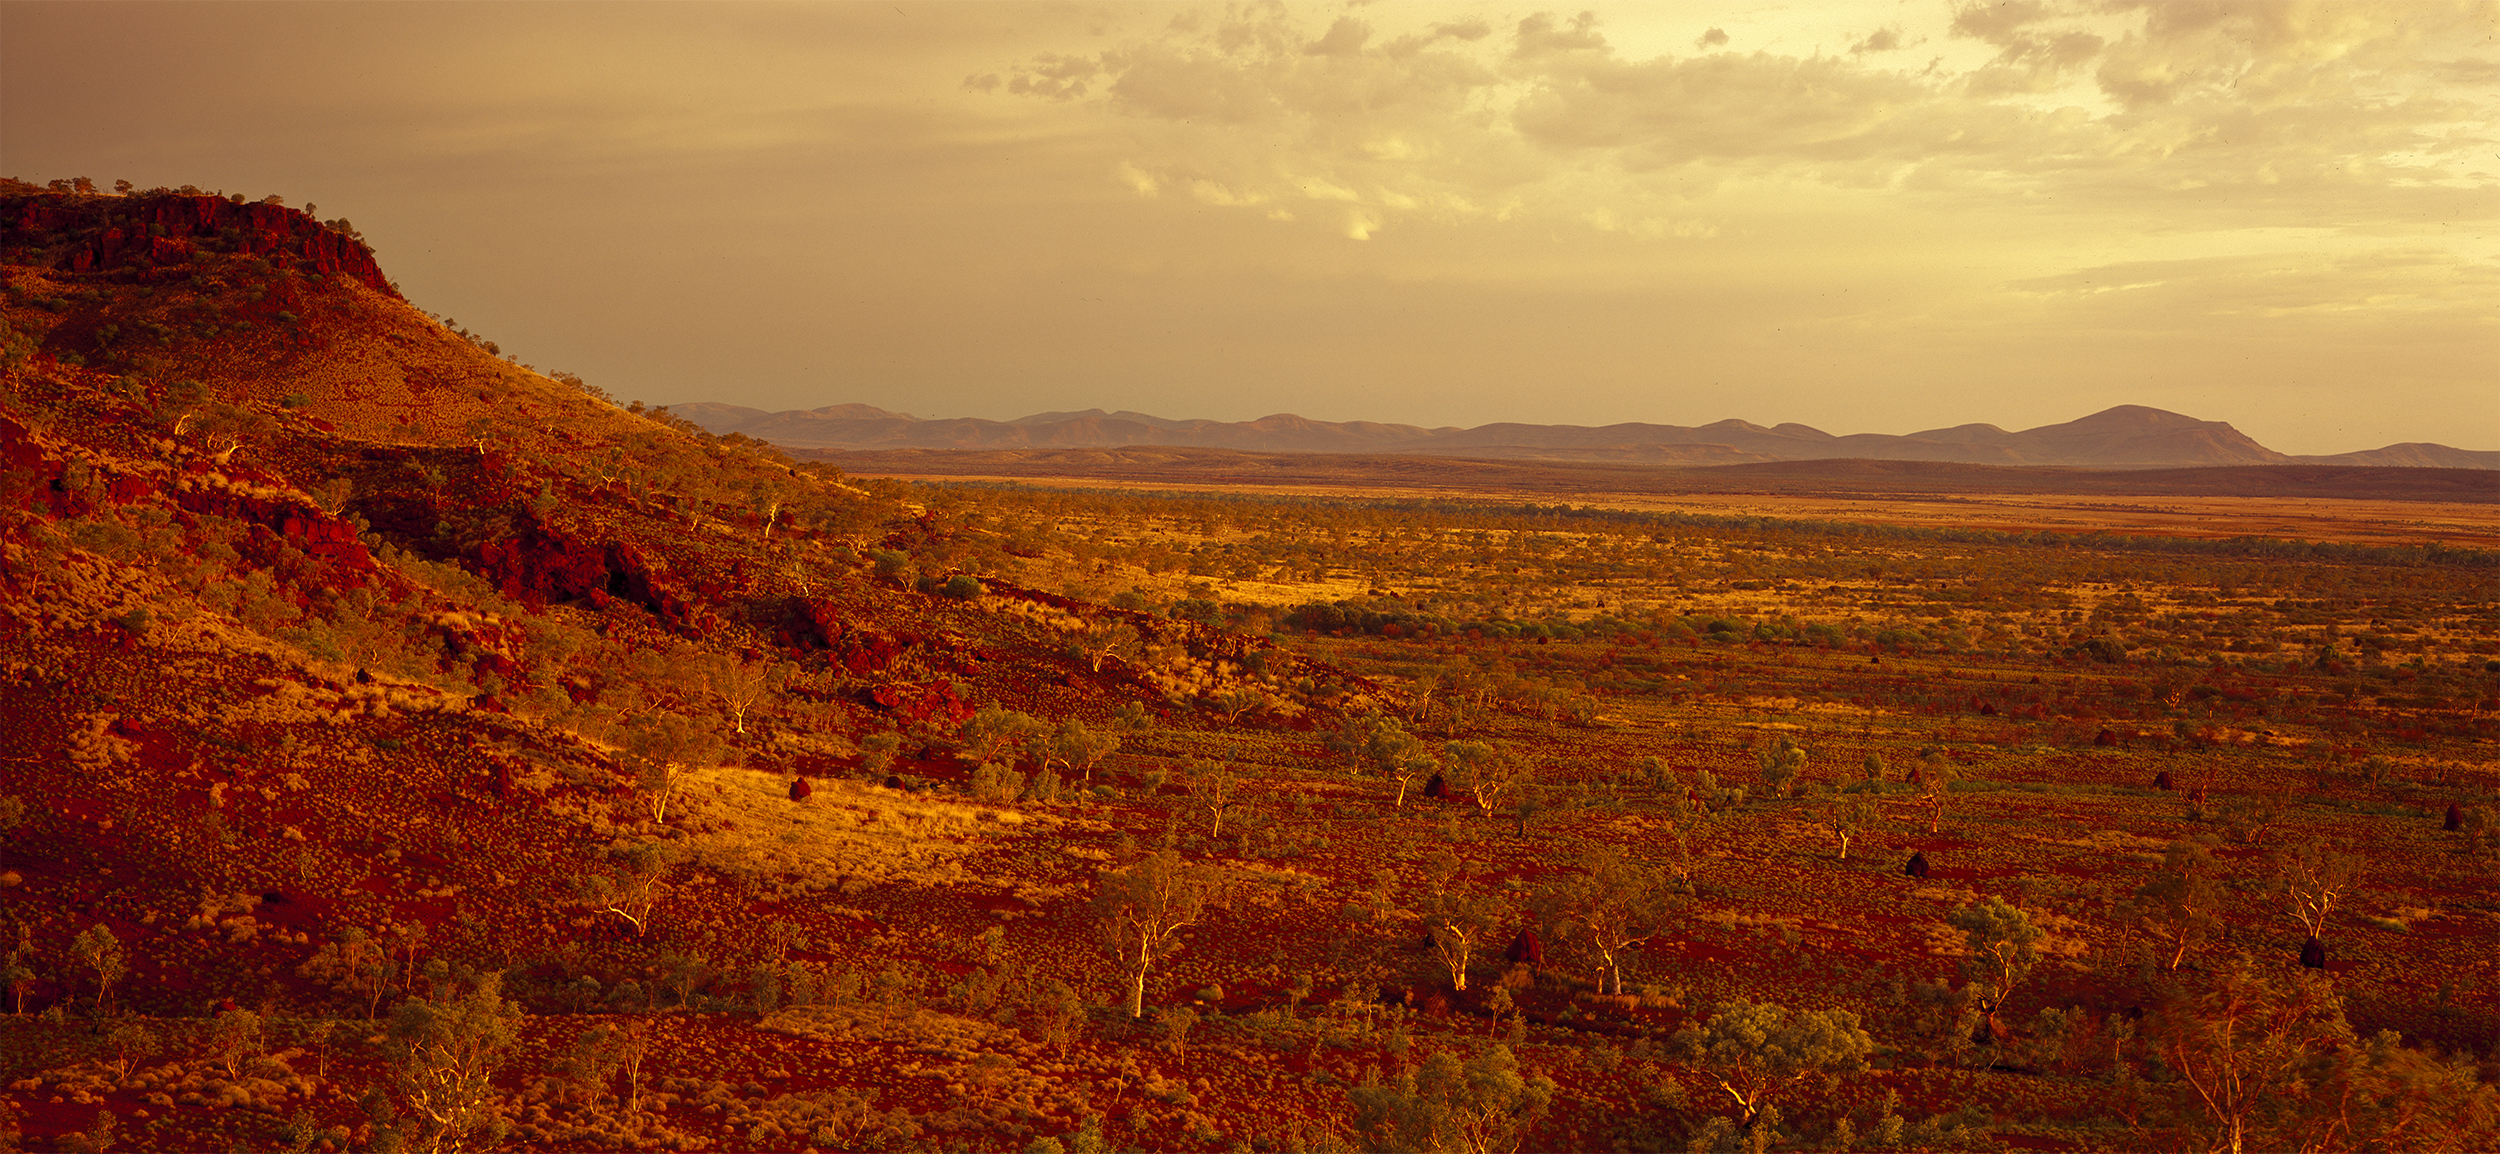  View Looking Toward Mt Brockman Across the Namuldi Flats, Hamersley Range, Western Australia, 2015. Edition of 3. 